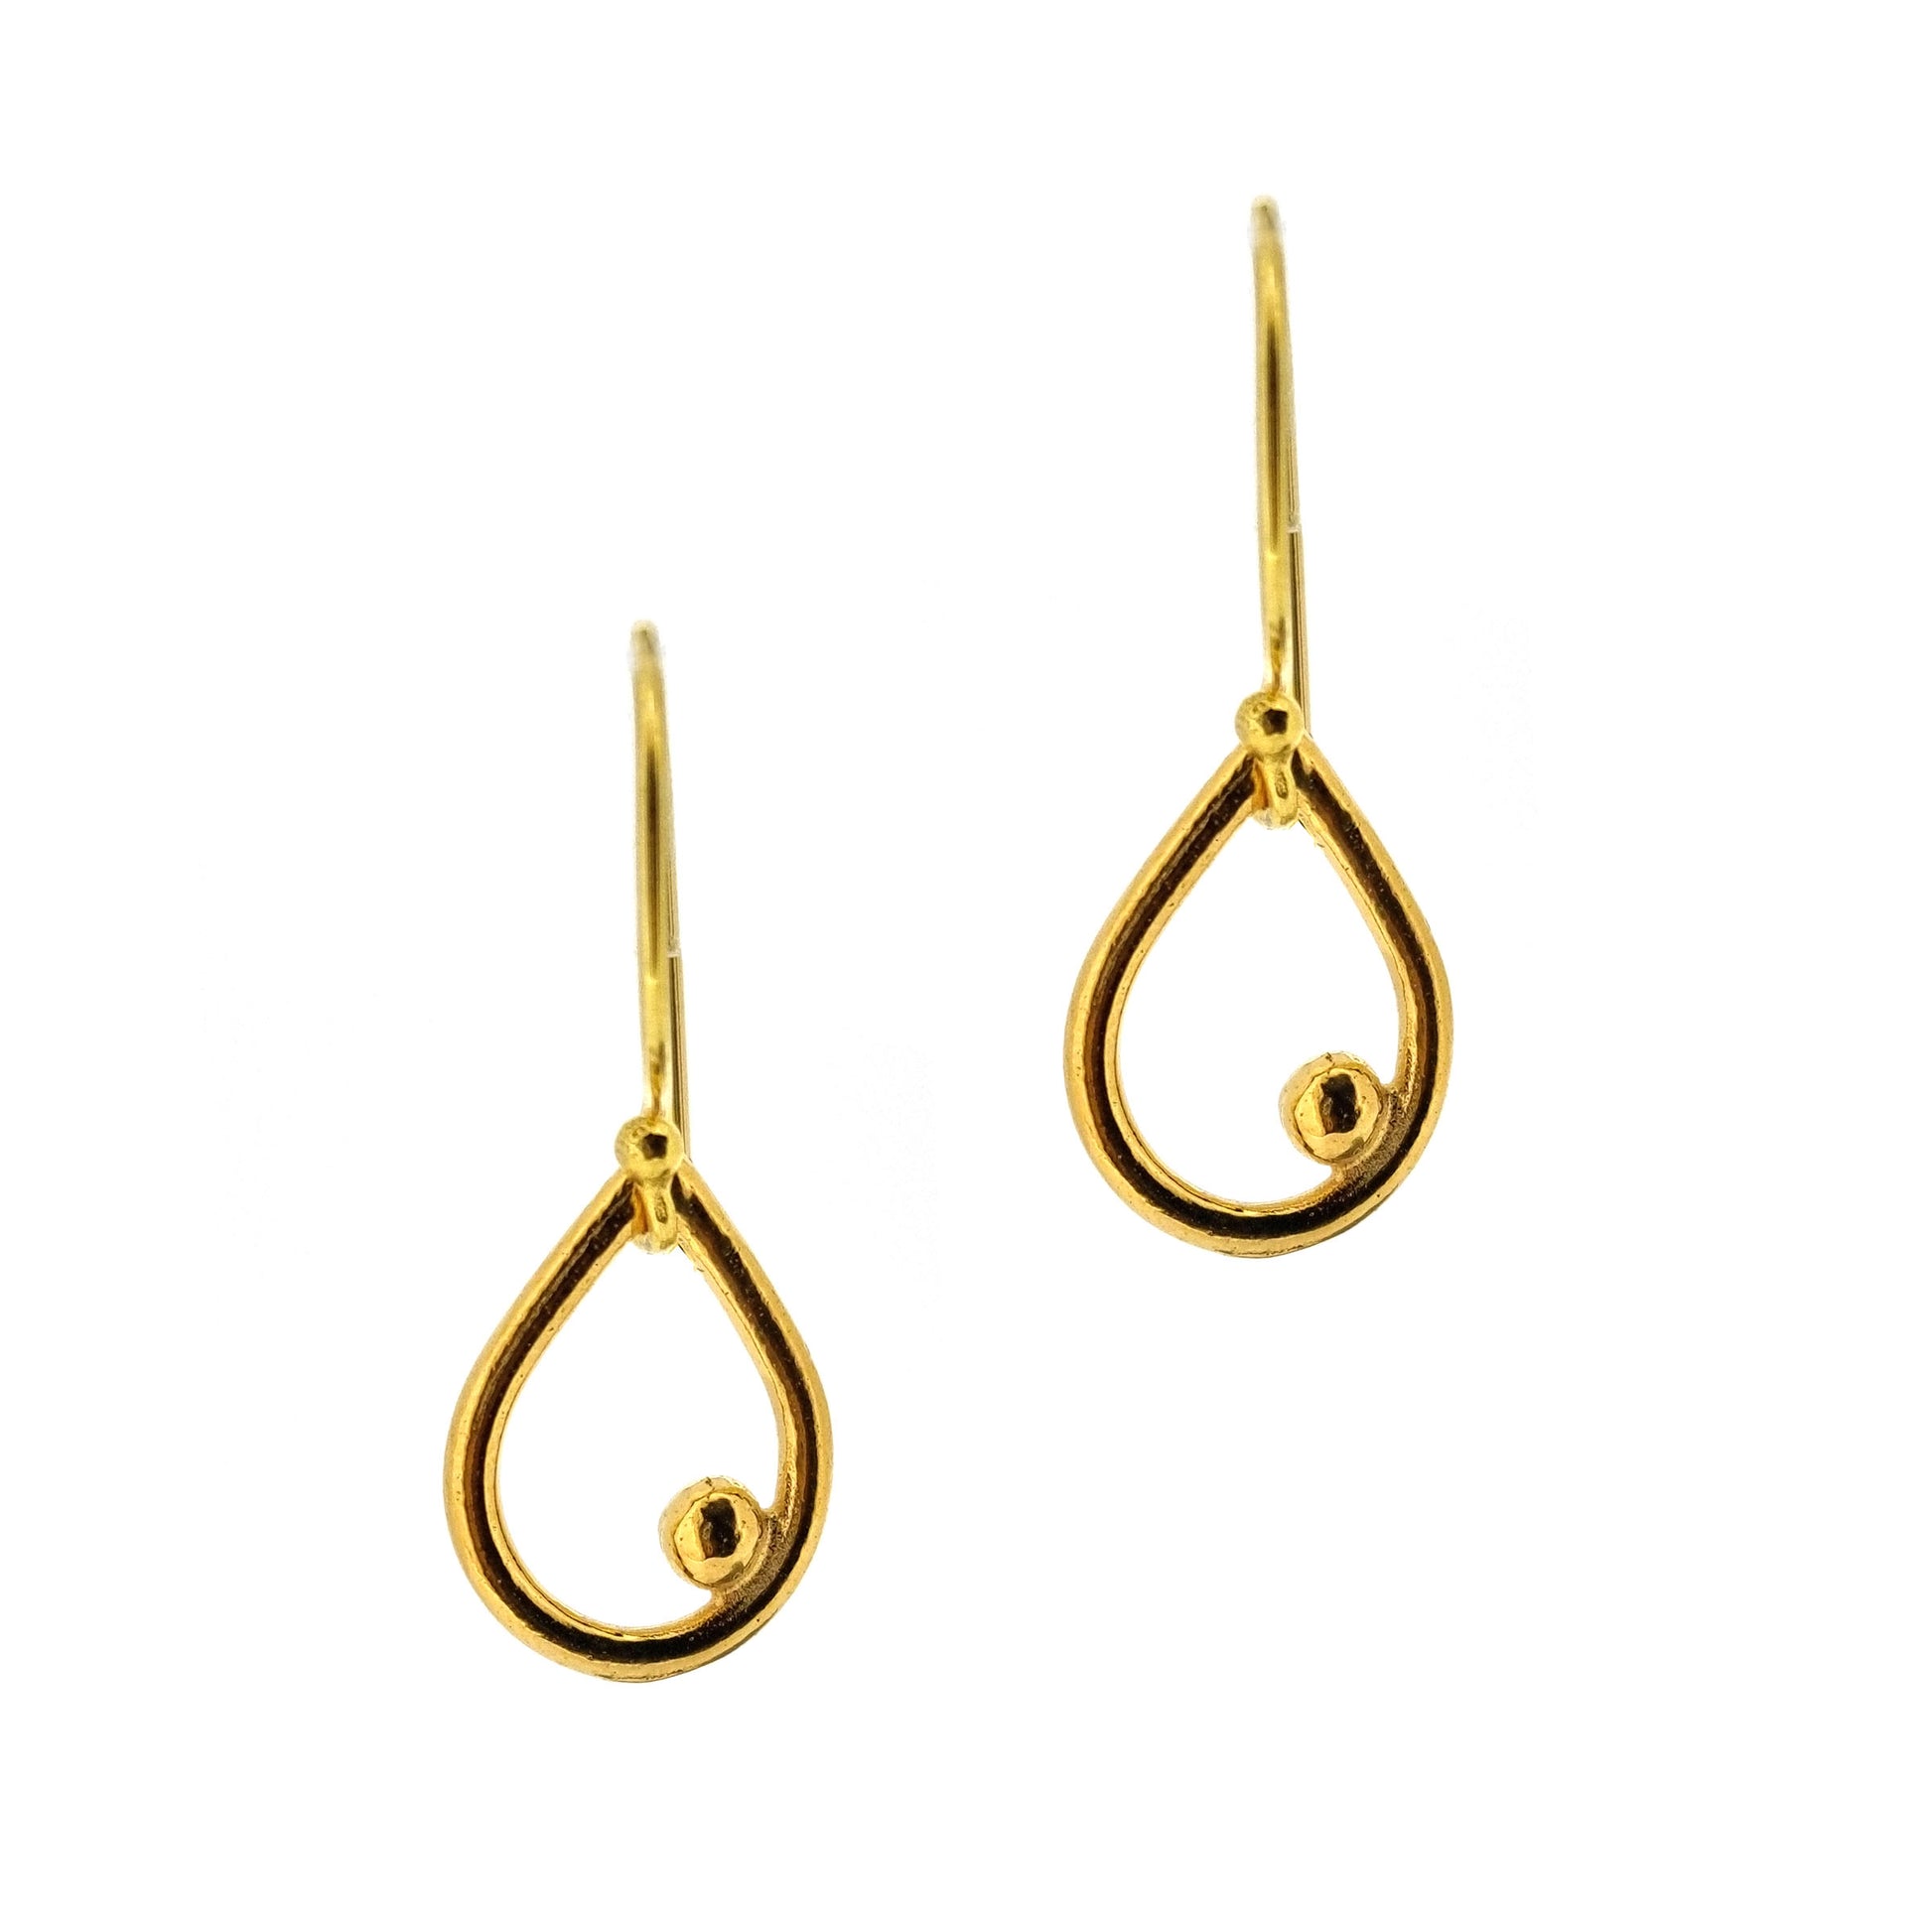 Yellow gold vermeil open teardrop with off-center ball drop earrings. Small